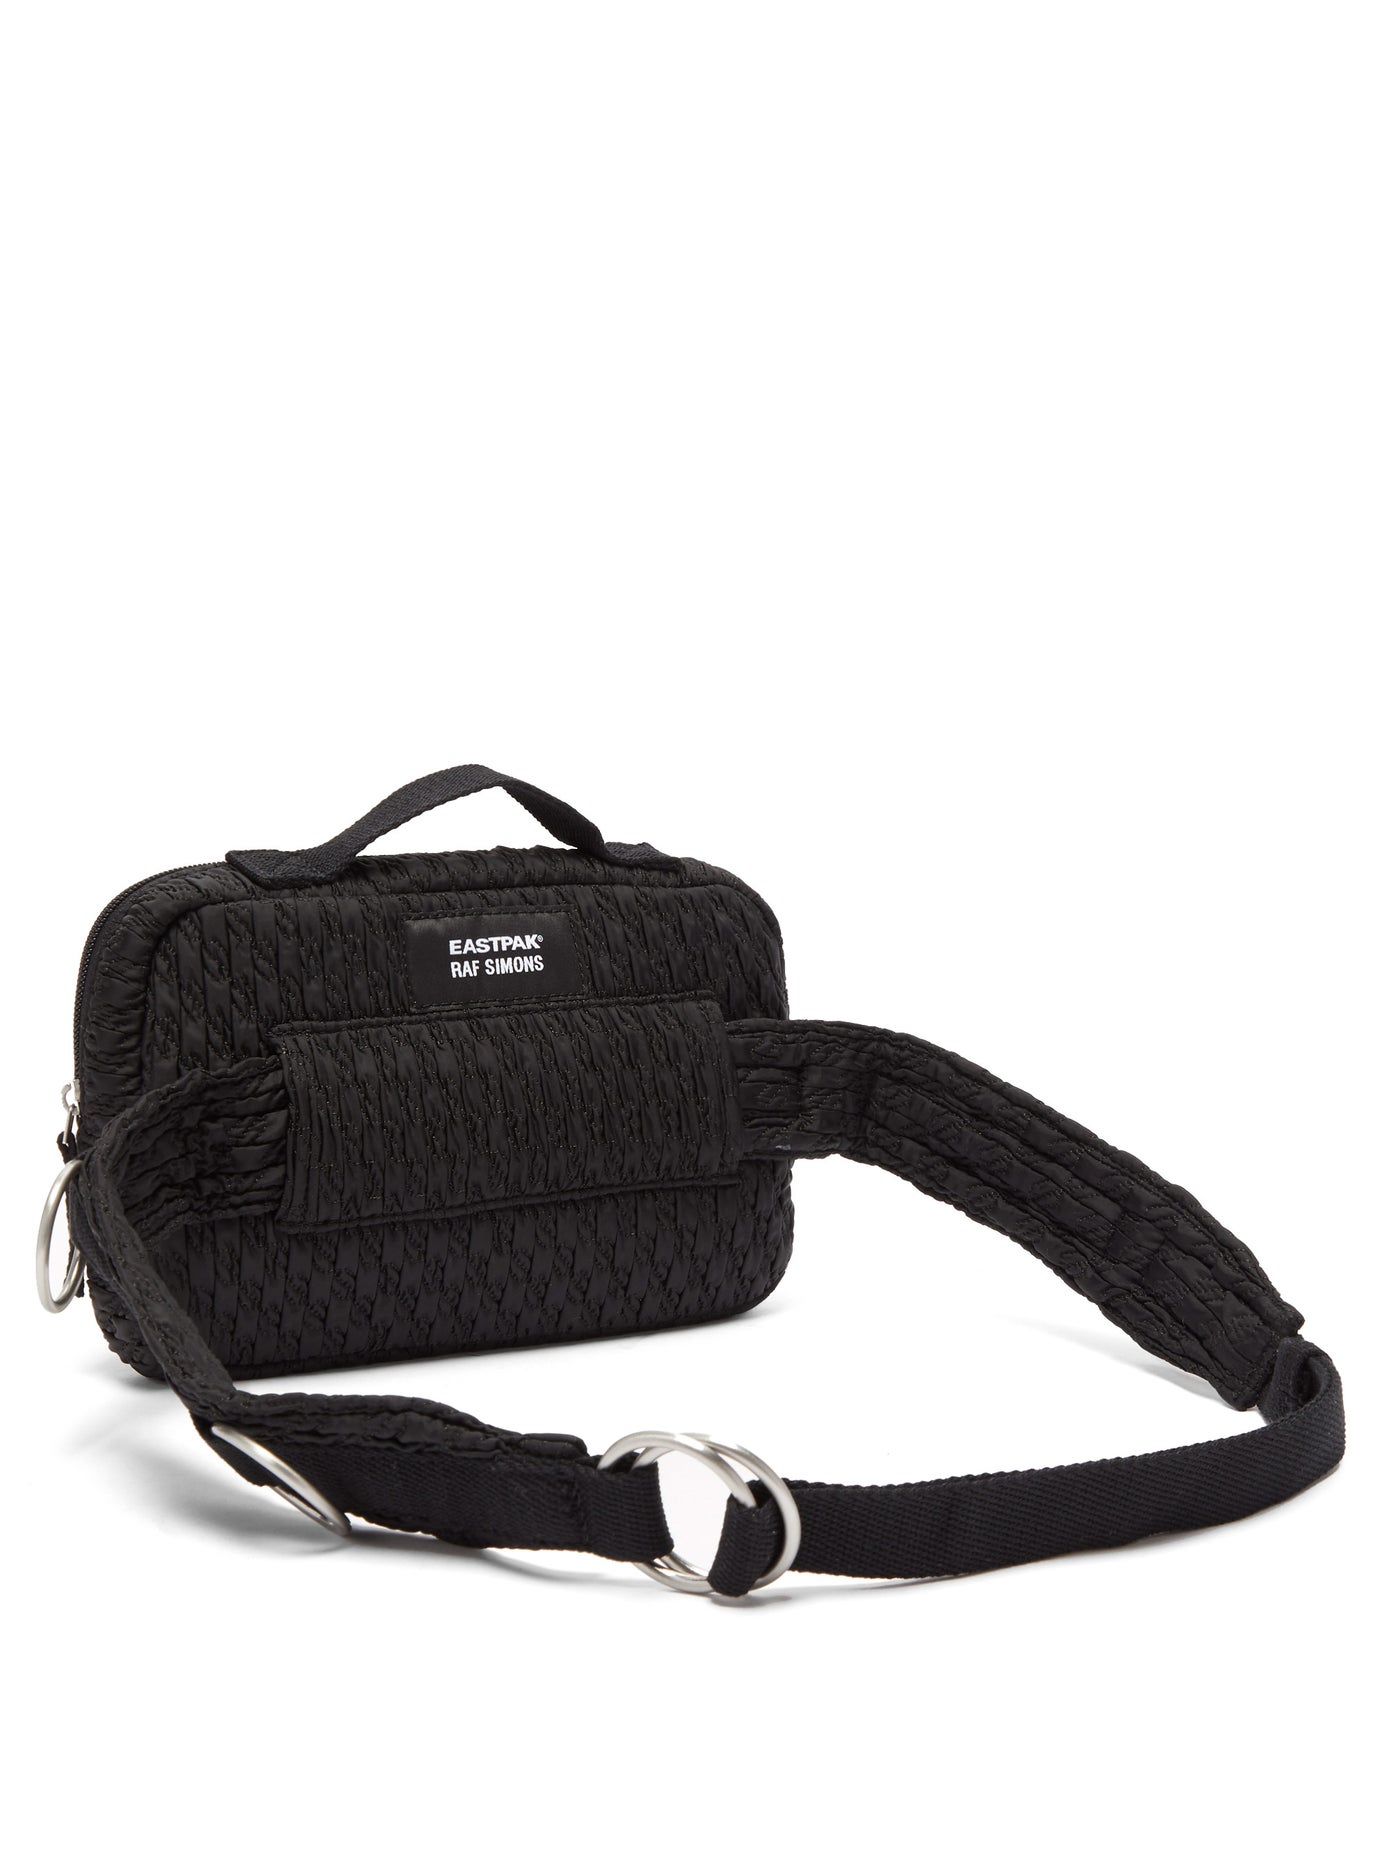 Raf Simons X Eastpak Black loop cross-body bag | Drops | Hypebeast